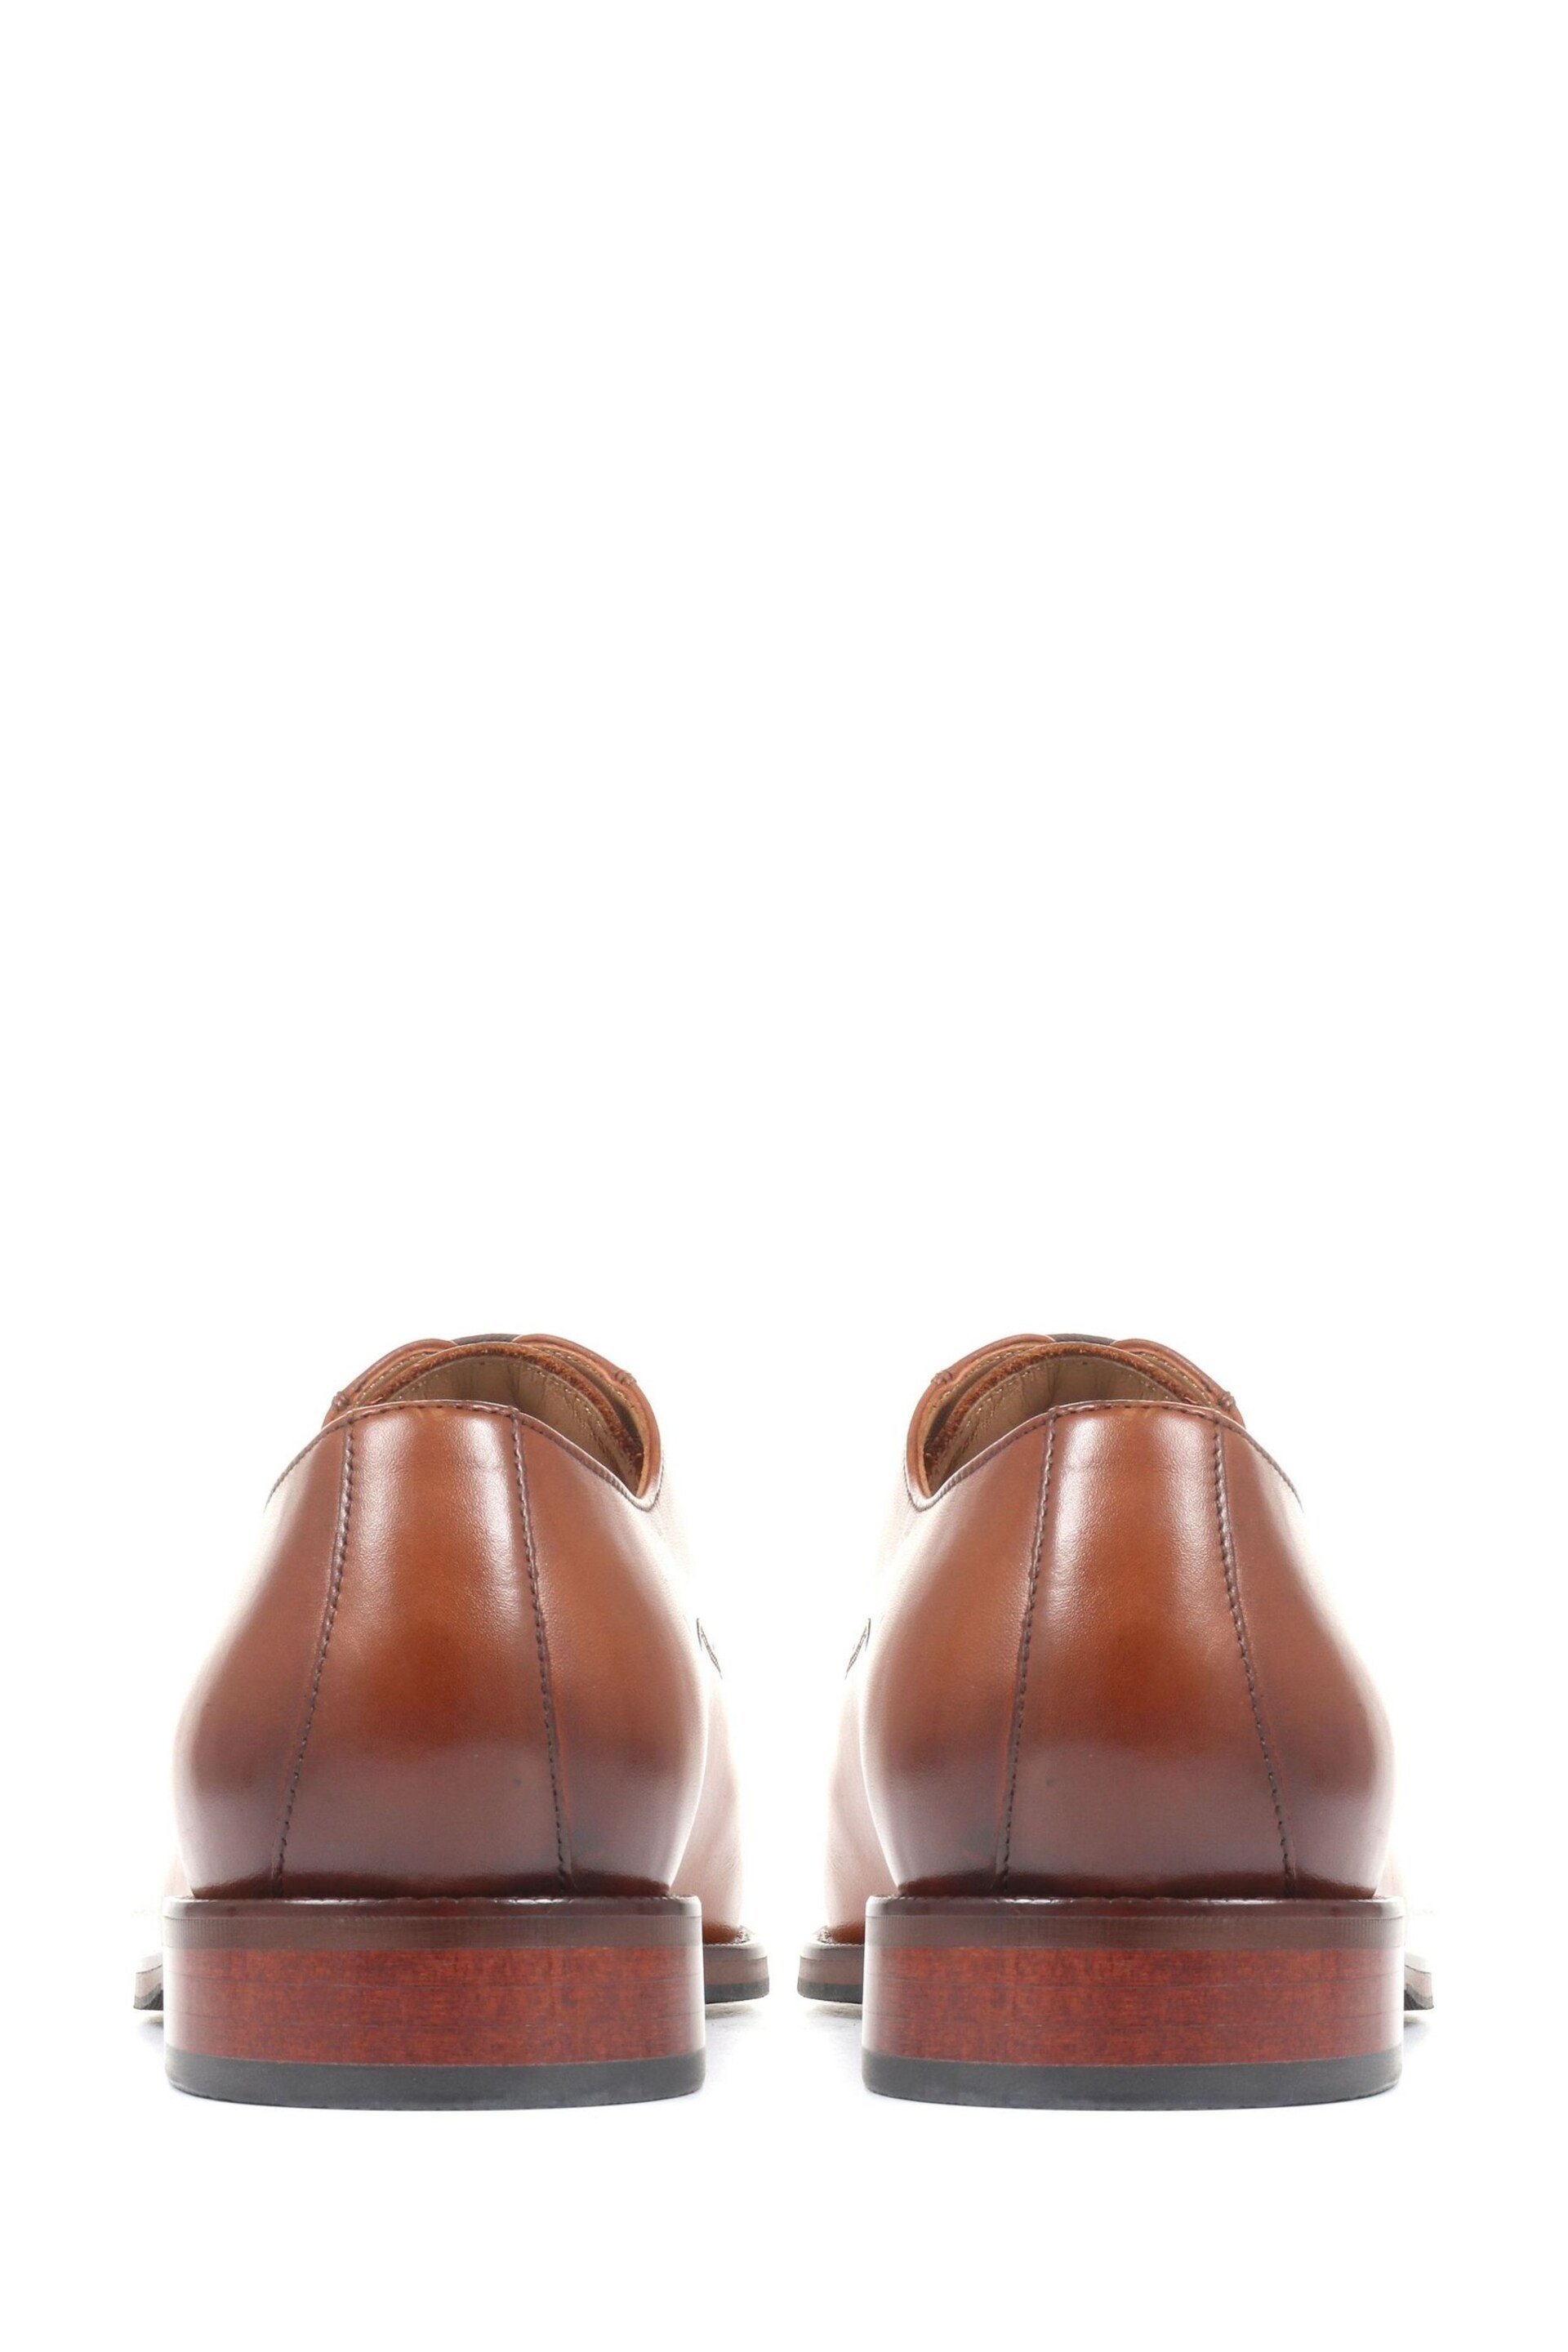 Jones Bootmaker Matthew Tan Leather Oxford Shoes - Image 5 of 5